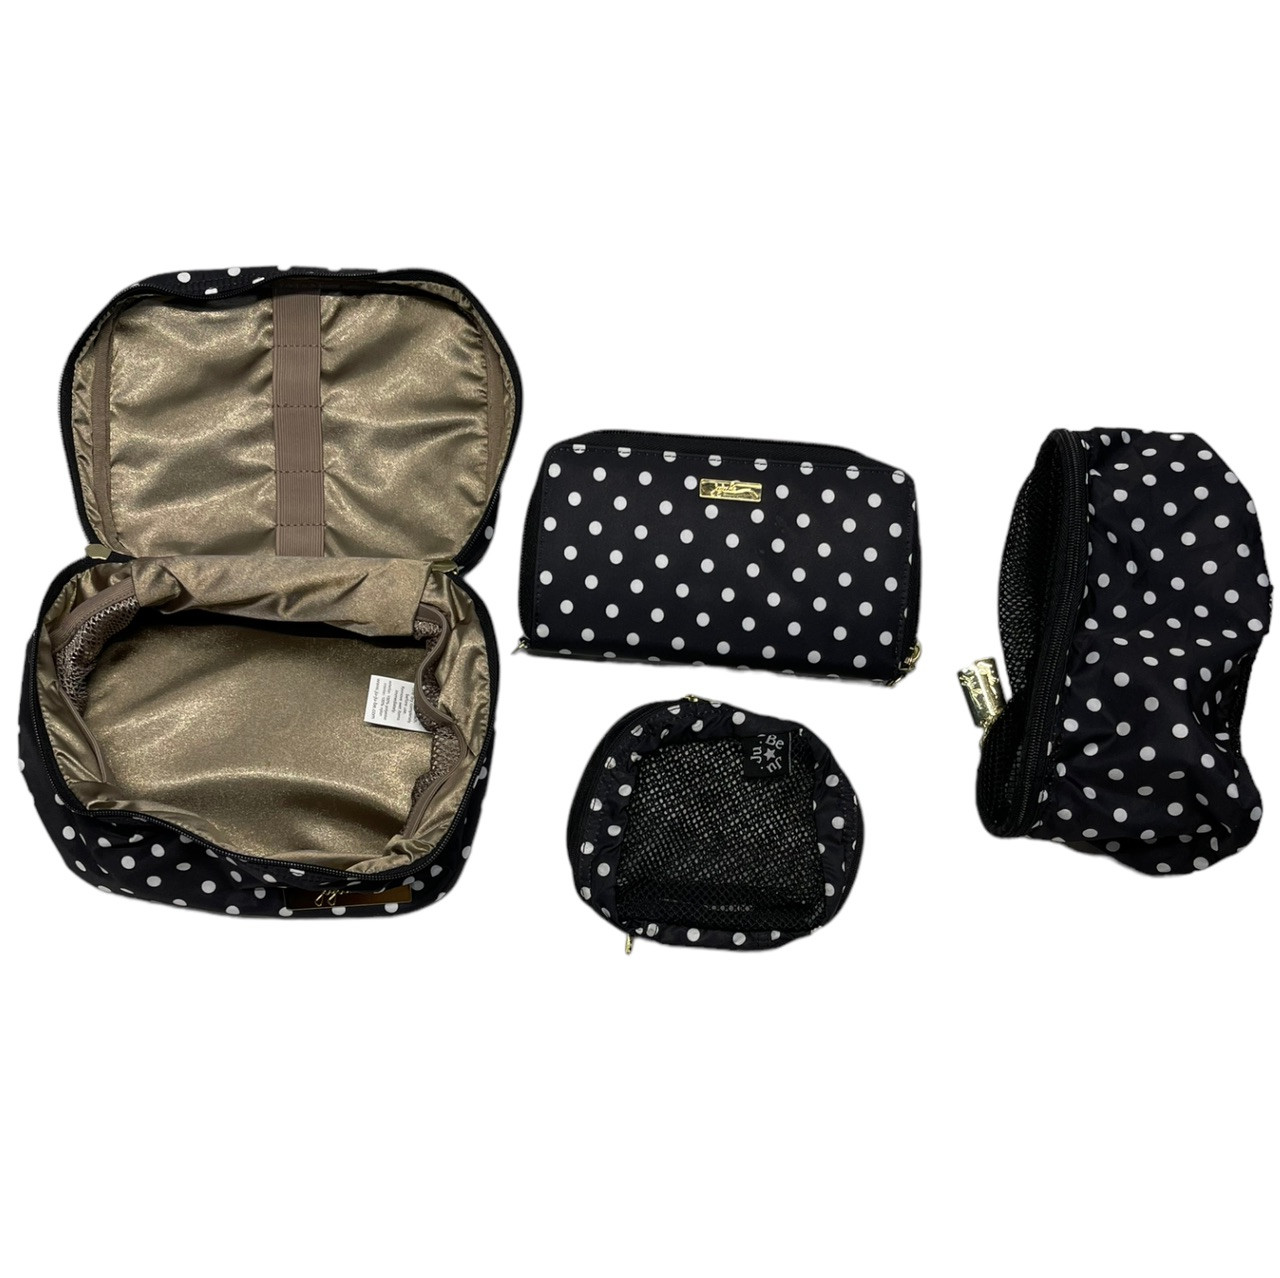 JuJuBe Black Polka Dot The Duchess Diaper Bag Accessories: Wallet